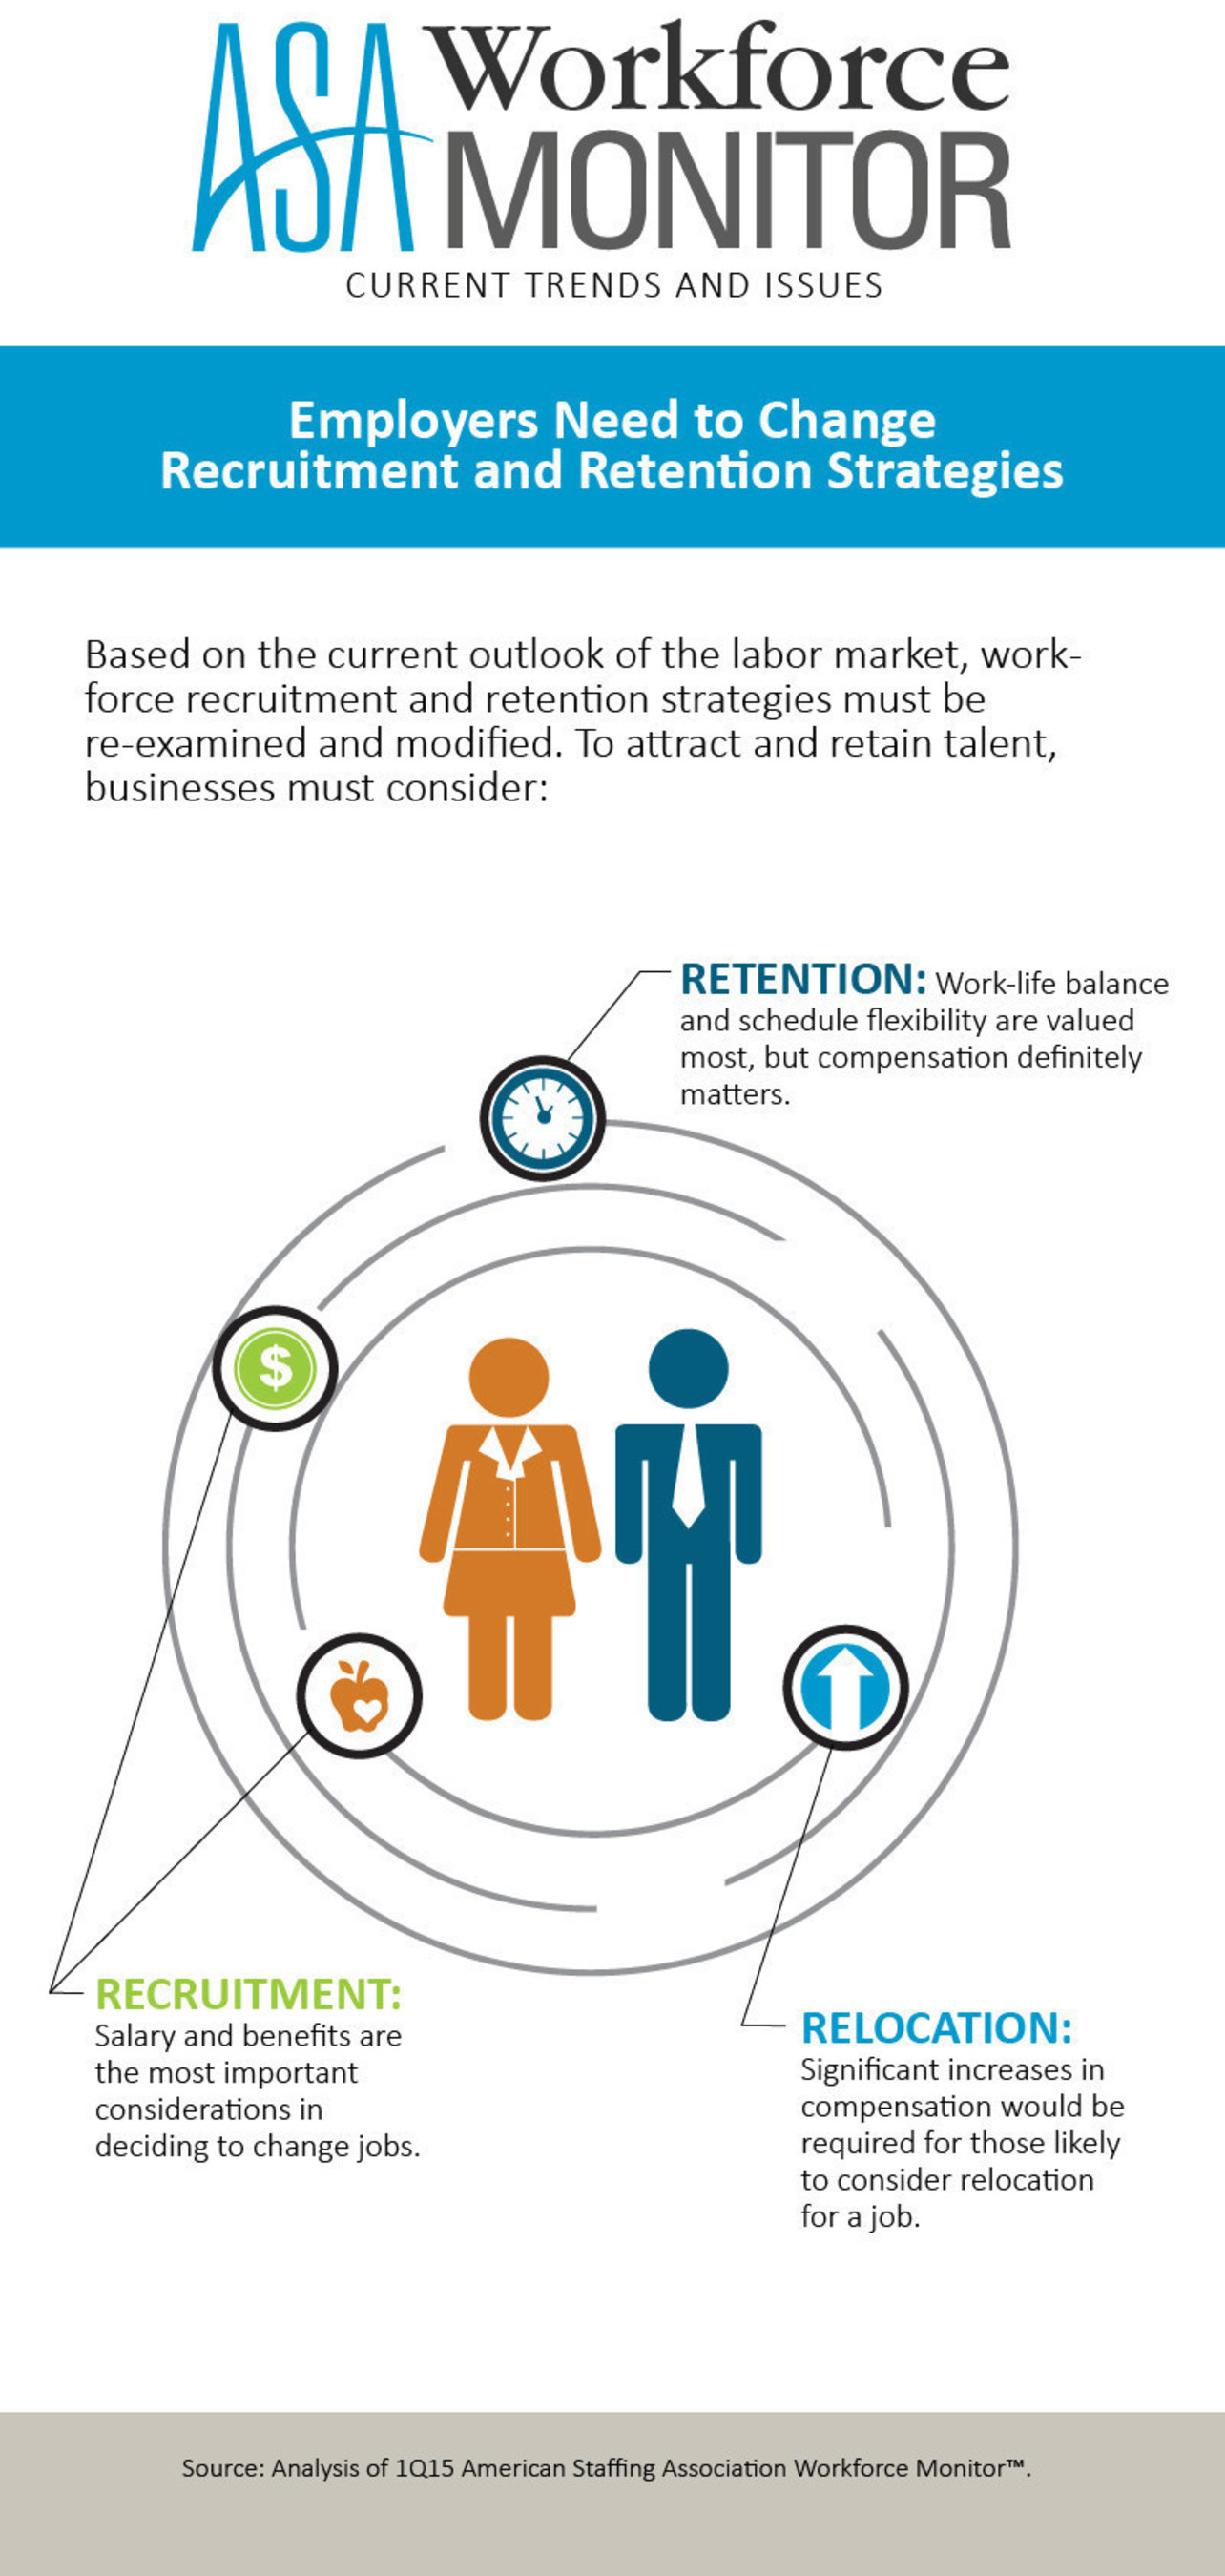 Employers need to change recruitment and retention strategies